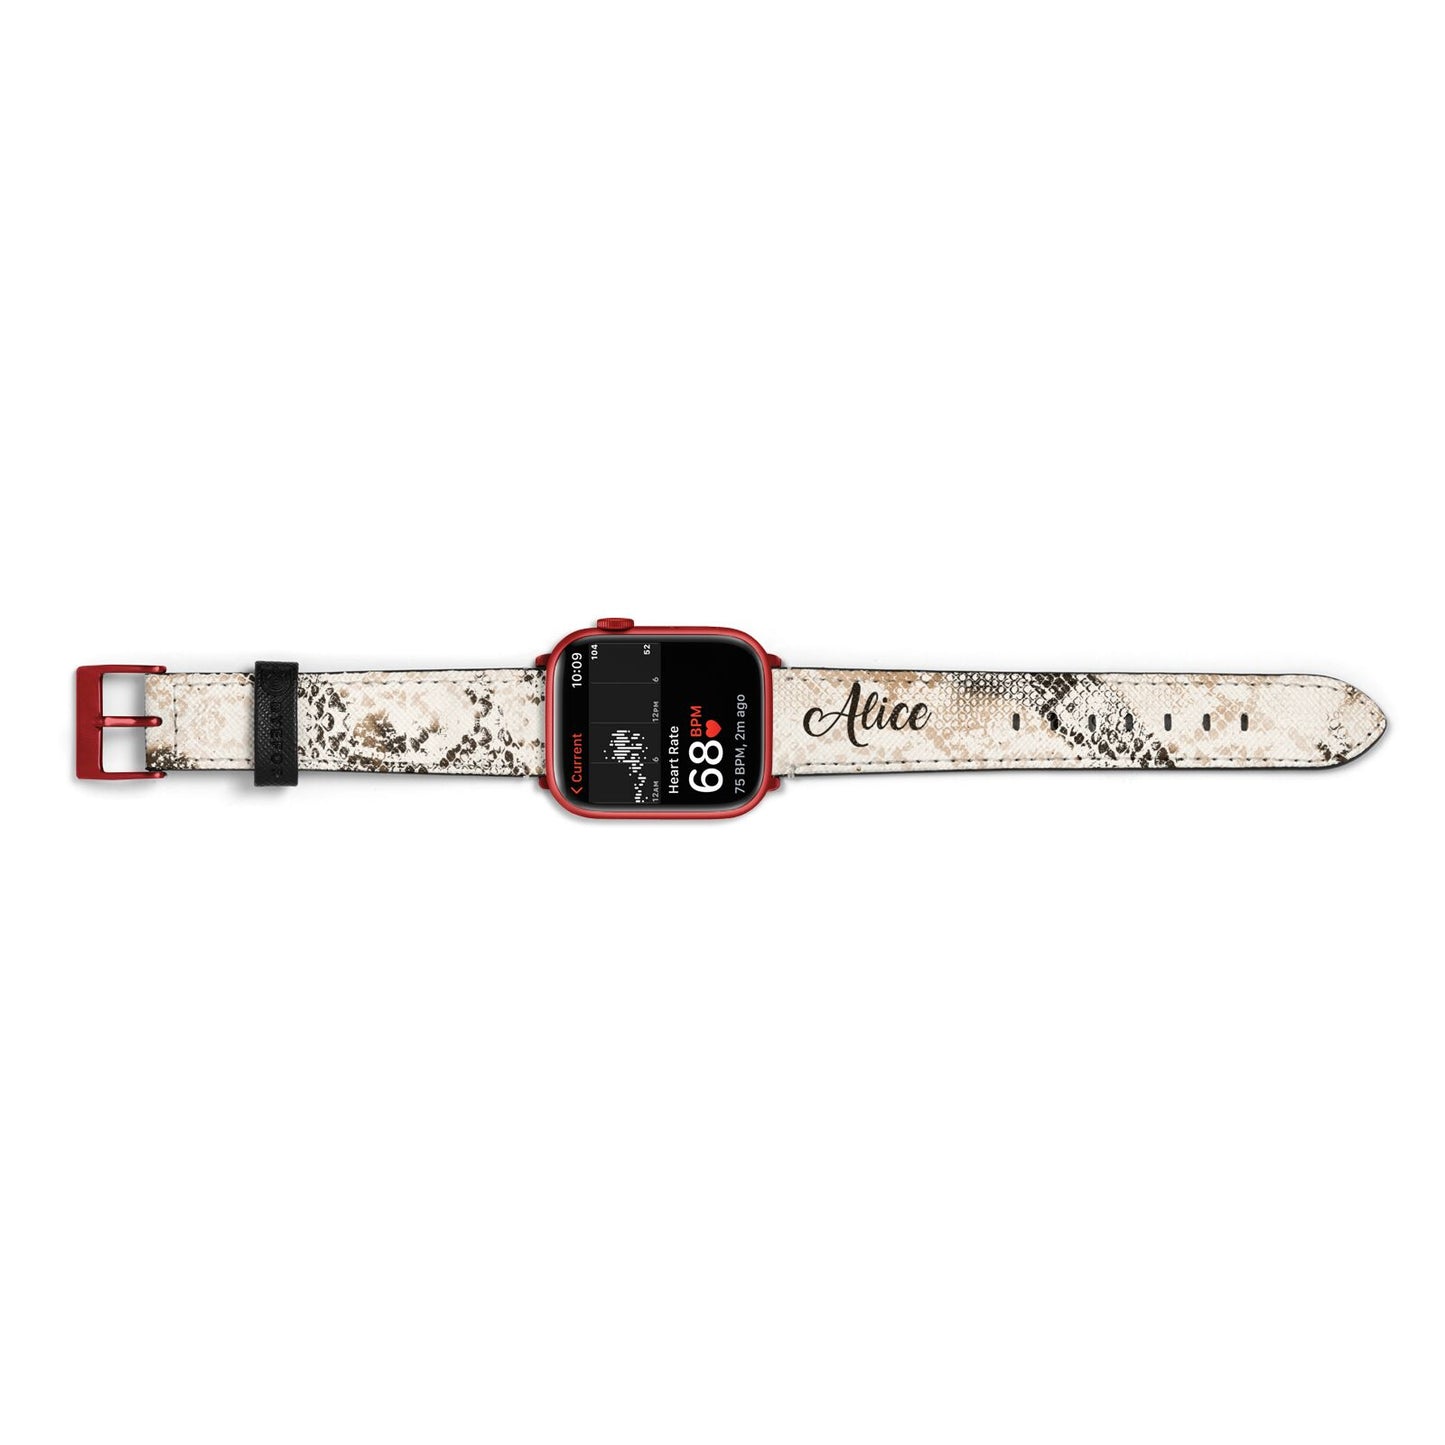 Custom Snakeskin Apple Watch Strap Size 38mm Landscape Image Red Hardware